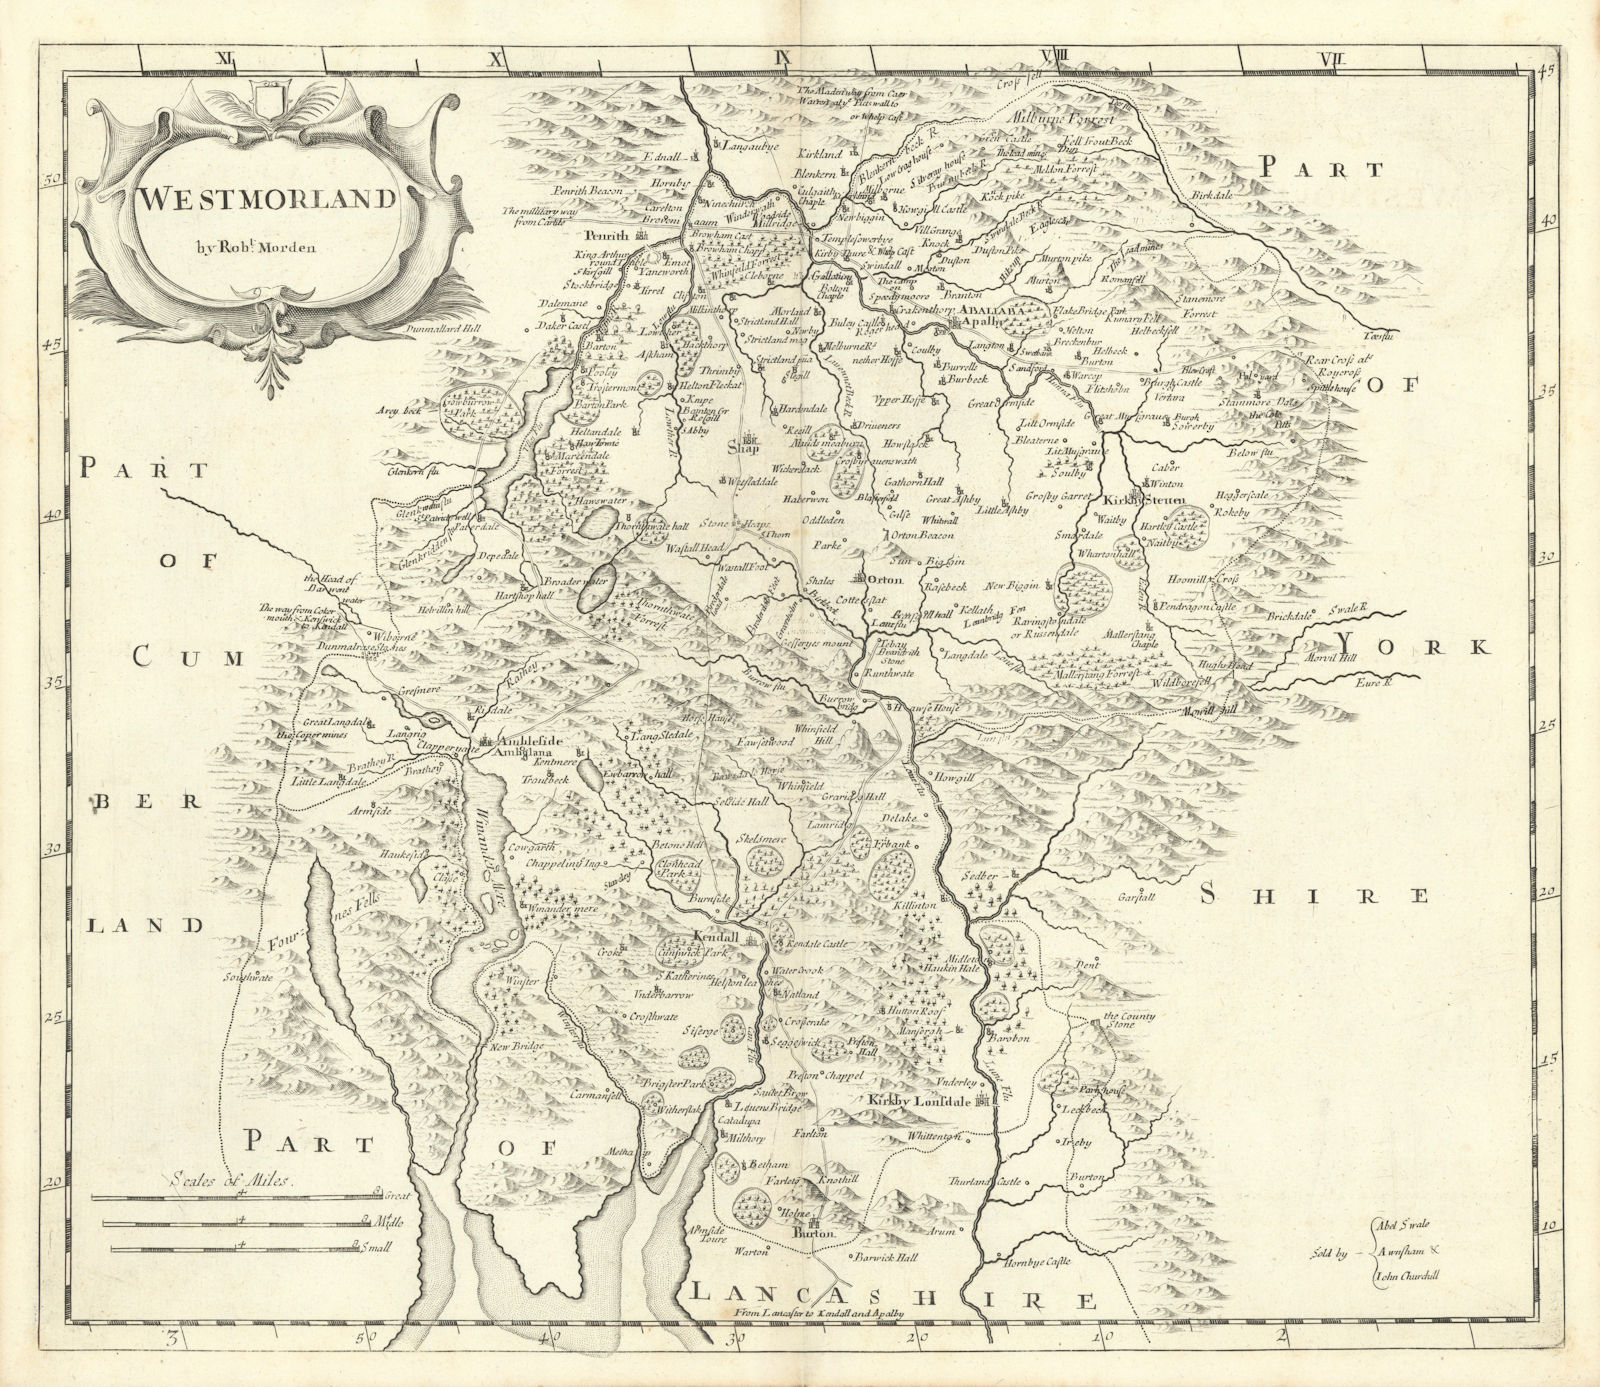 Westmoreland. 'WESTMORLAND' by ROBERT MORDEN from Camden's Britannia 1722 map